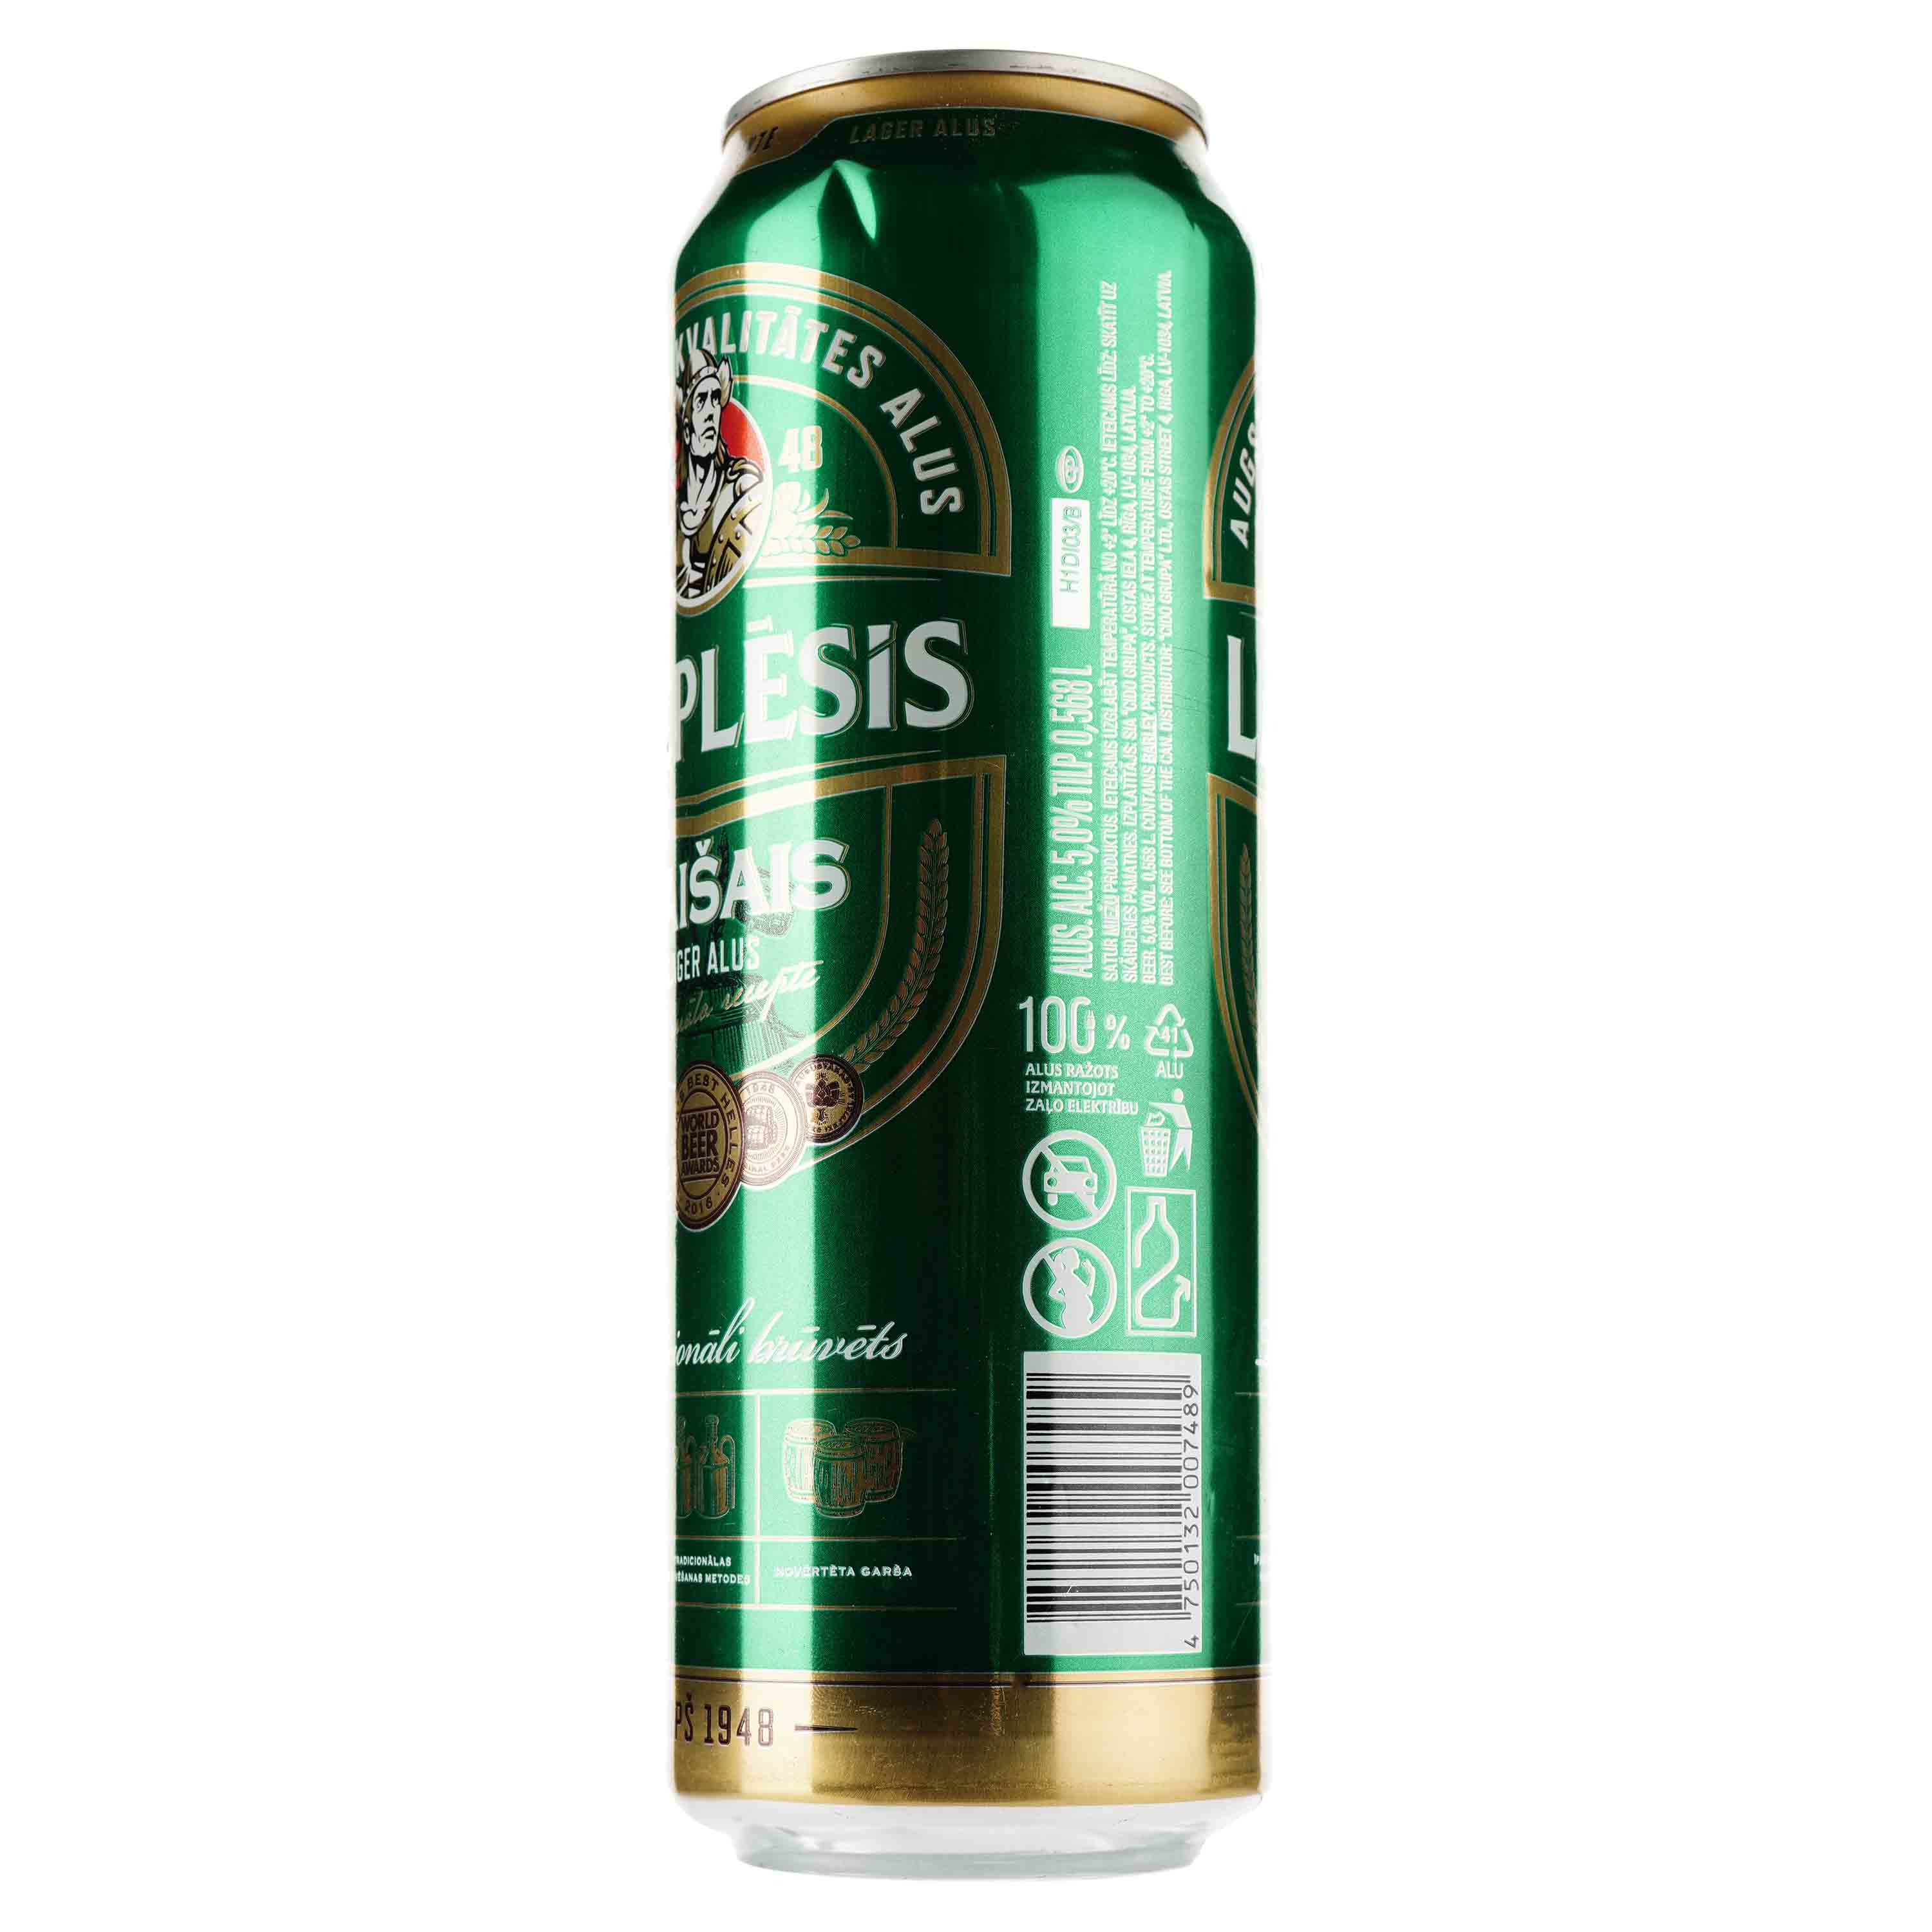 Пиво Lacplesis Gaisais світле, 5%, з/б, 0.568 л - фото 2